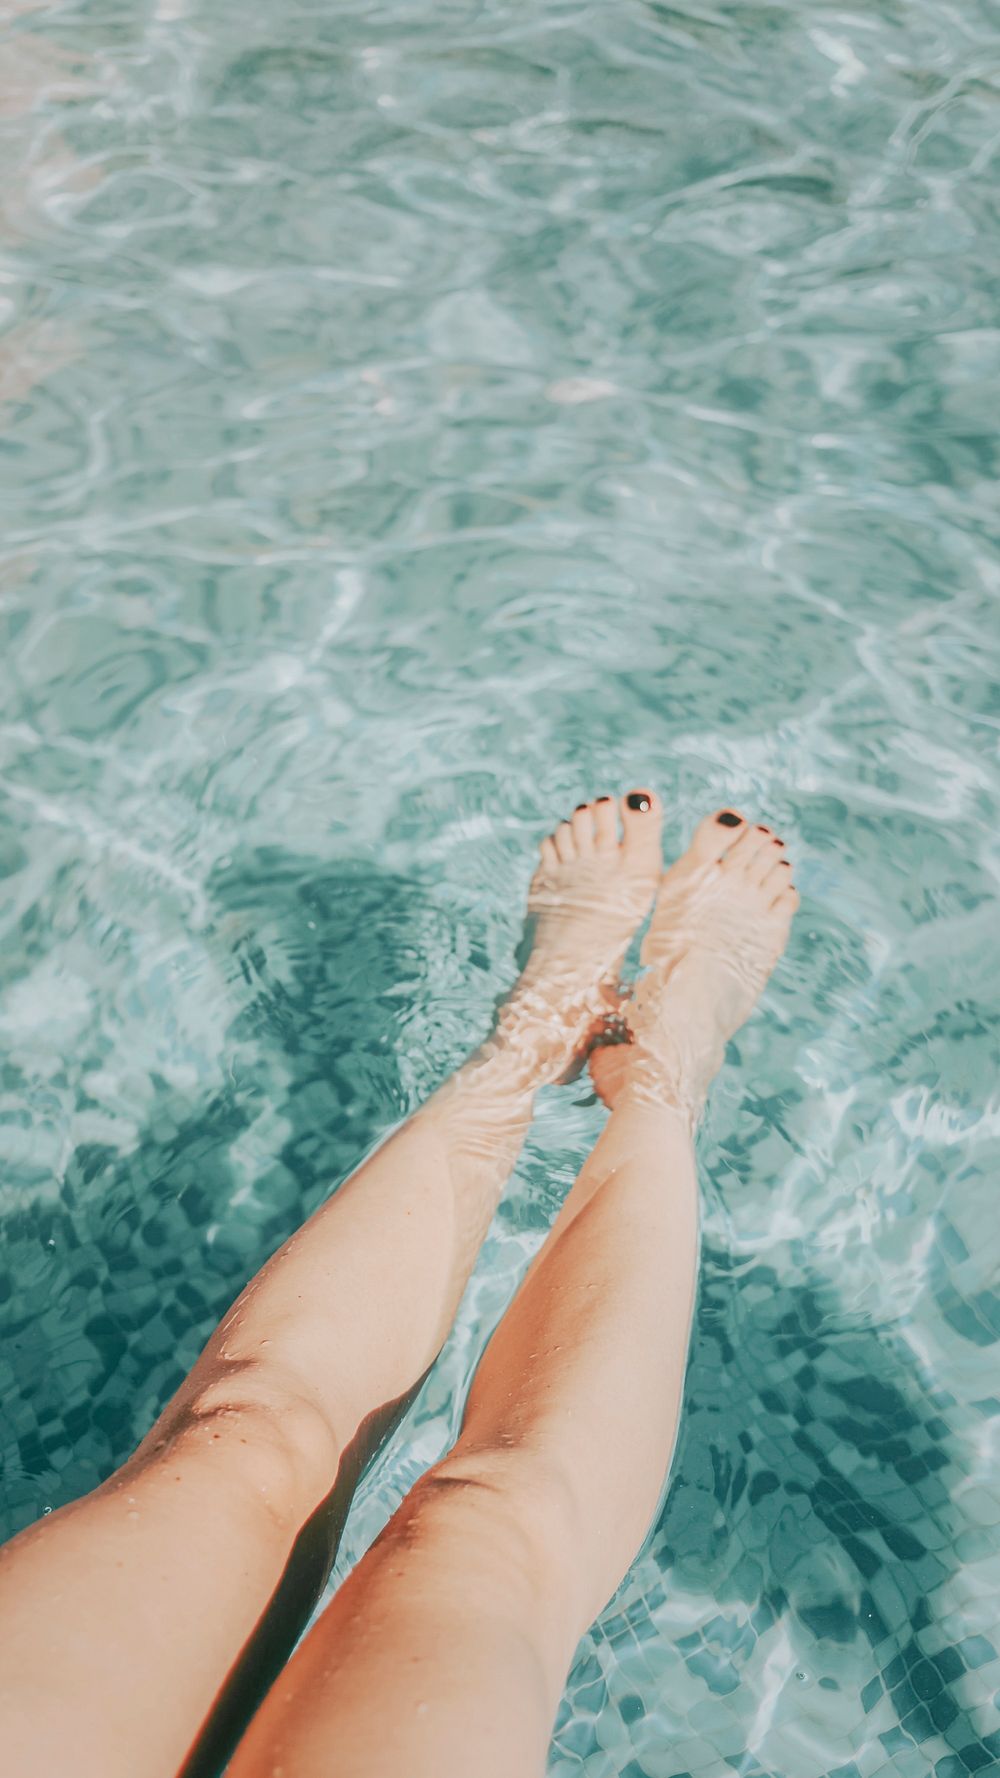 Woman putting her legs in the pool | Premium Photo - rawpixel